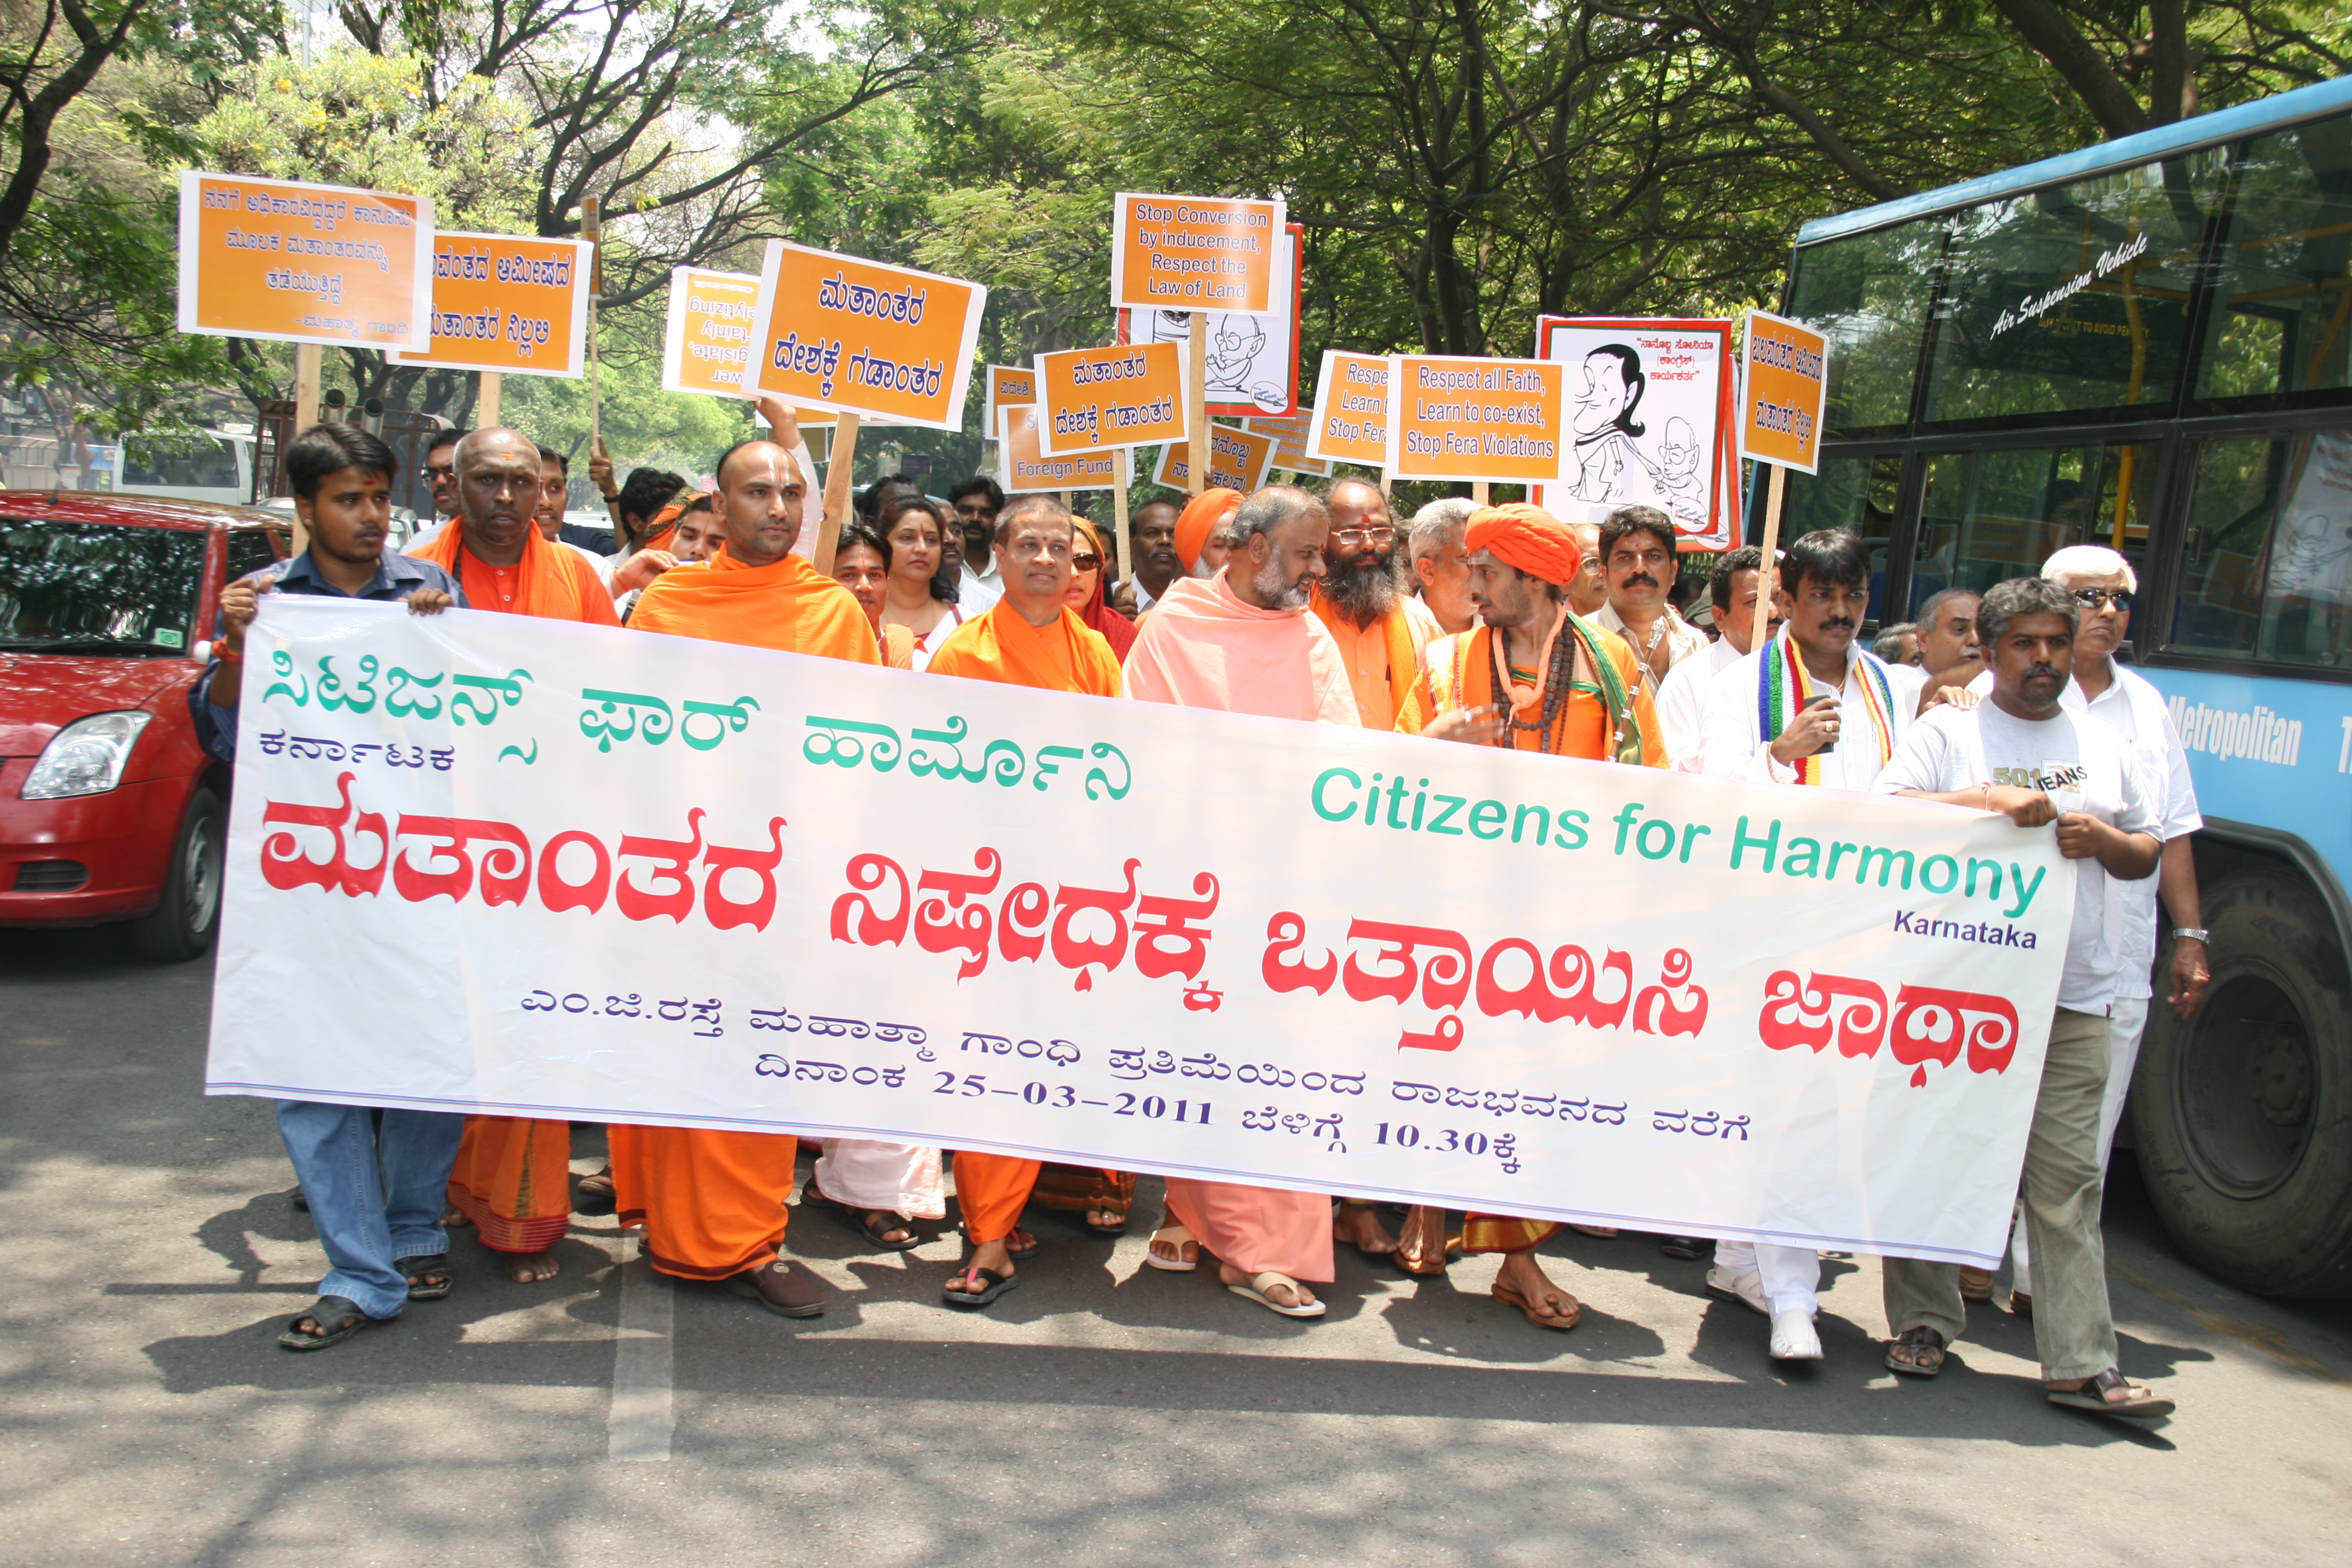 March for bringing anti-Conversion law at Bangalore: ಮತಾಂತರ ನಿಷೇಧಿಸುವ ಕಾಯ್ದೆ ಜಾರಿಗೆ ತರುವಂತೆ ಒತ್ತಾಯ